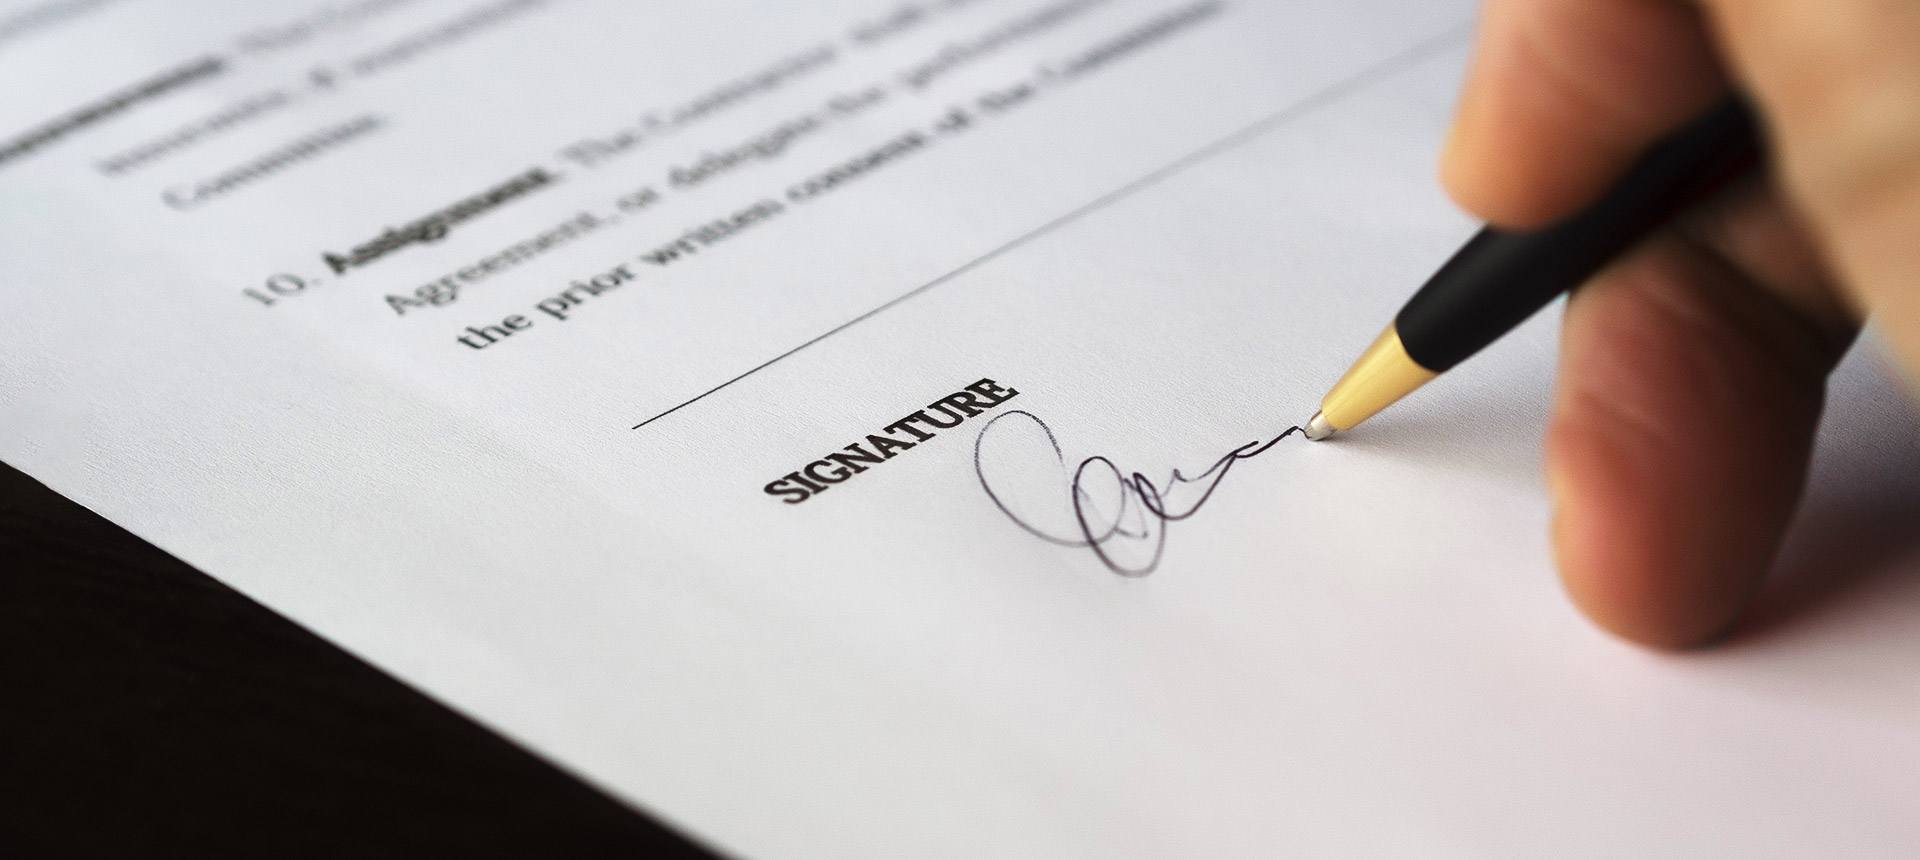 Webinar Agreements in outsourcing